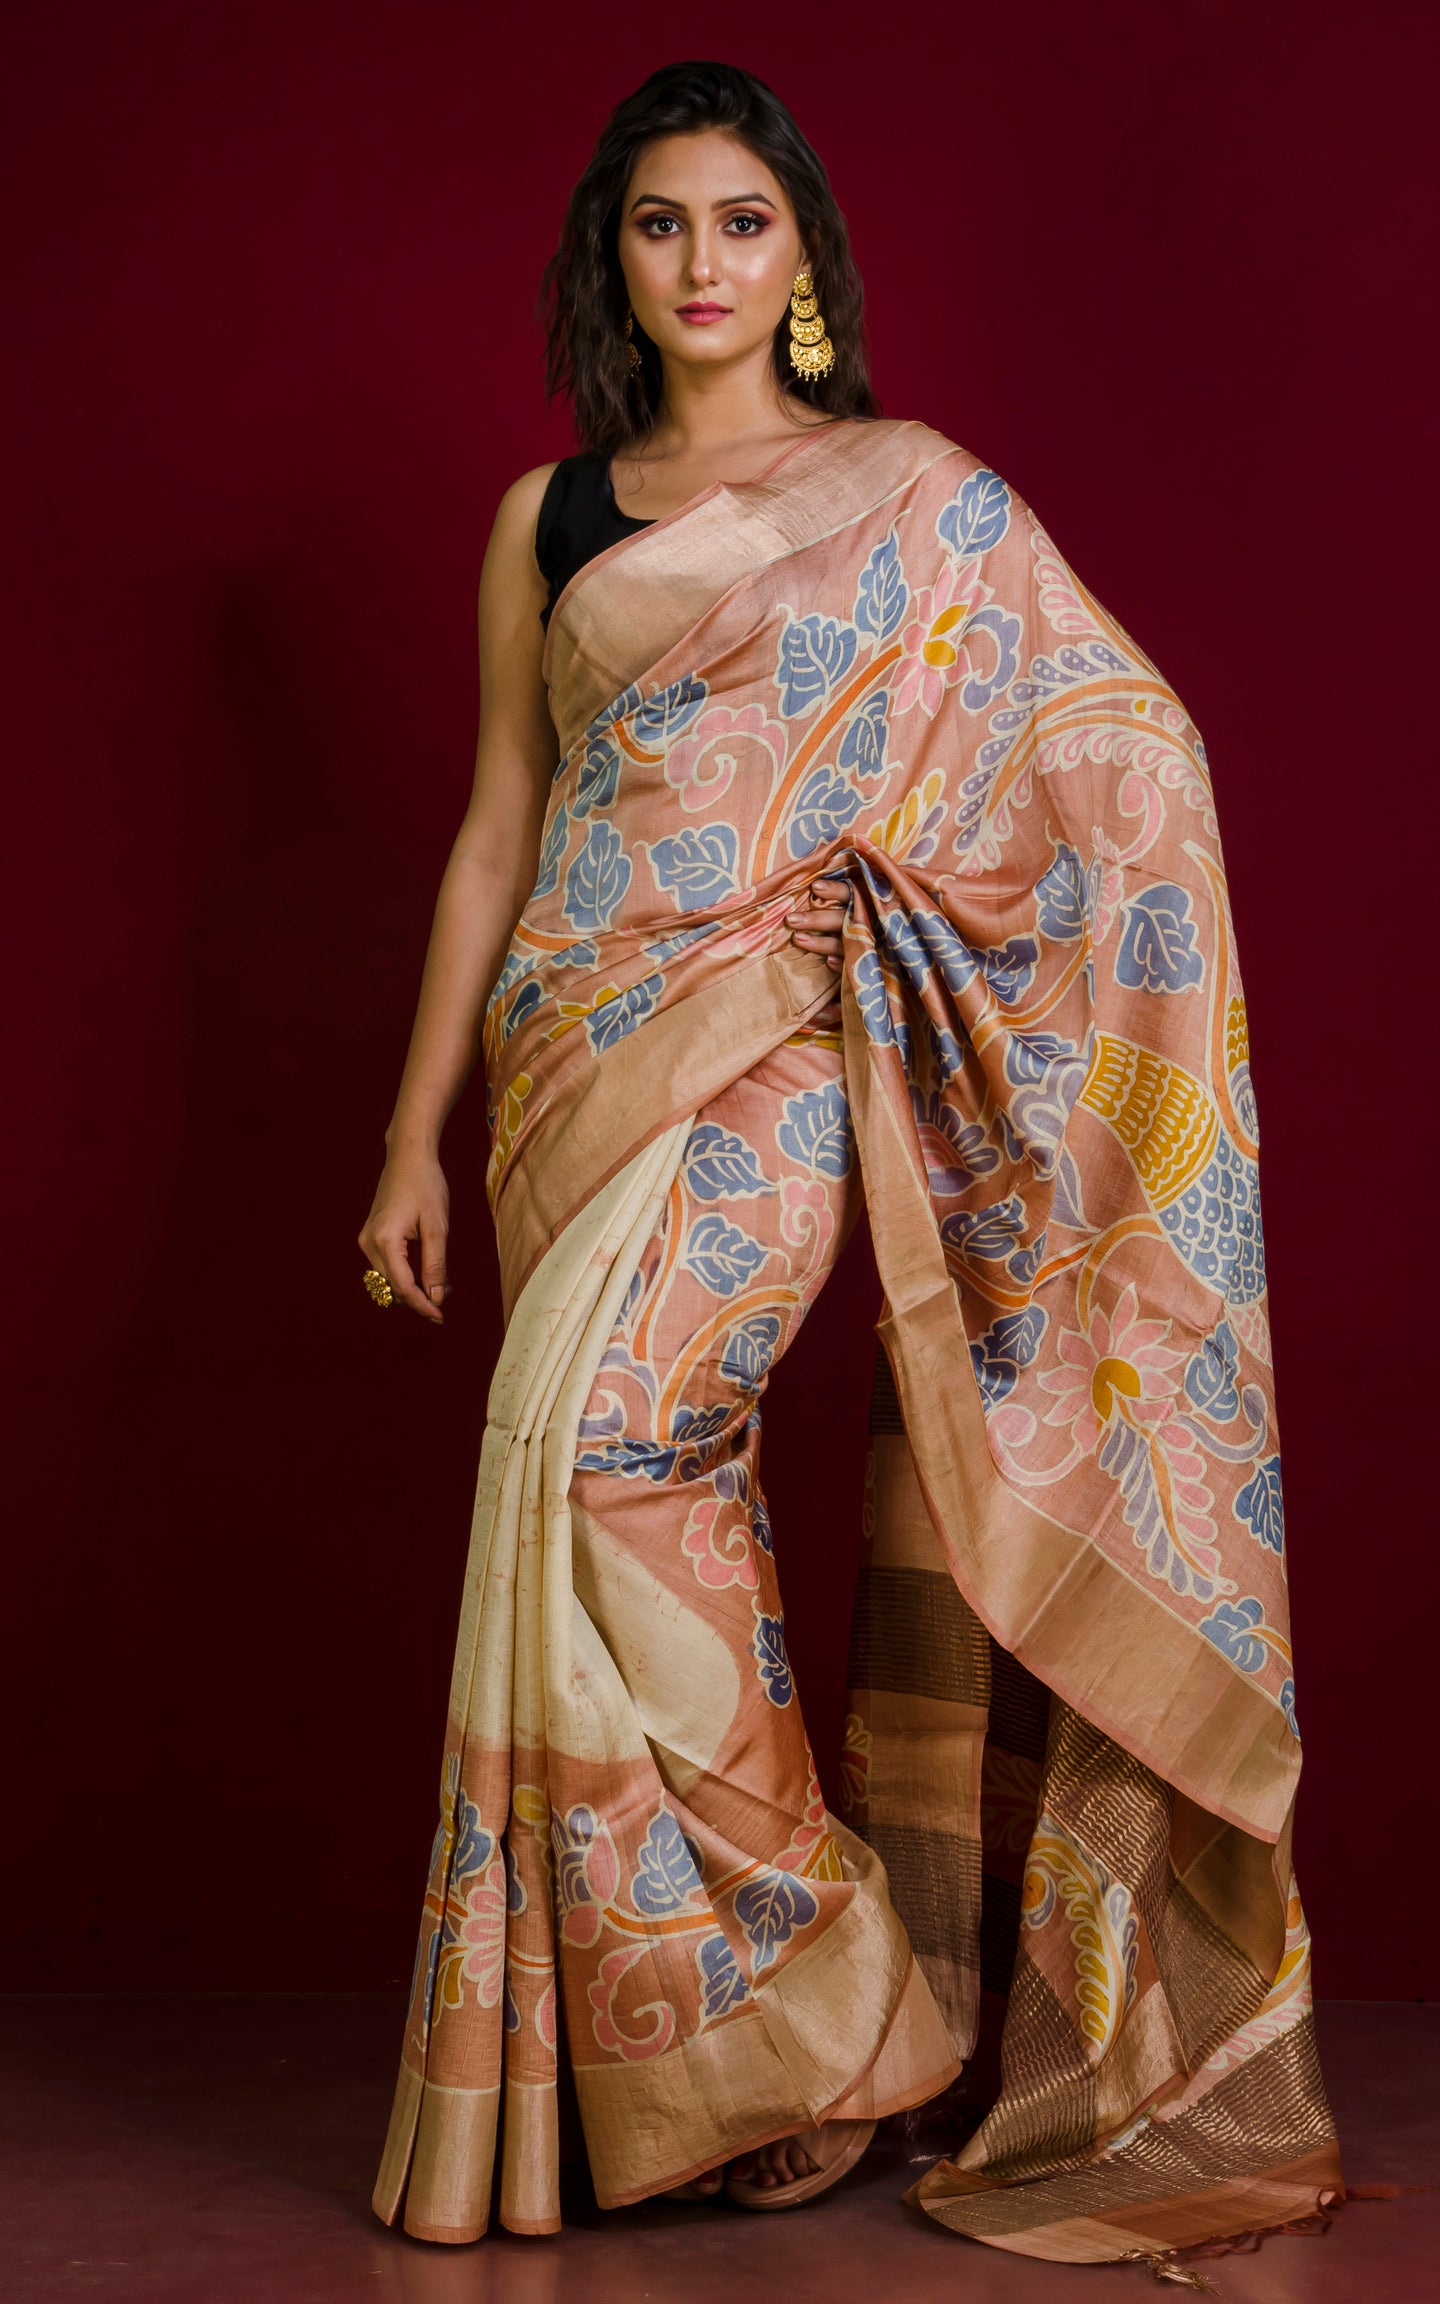 Kalamkari Batick Printed Soft Tussar Silk Saree in Beige, Rose Gold, Brush Gold and Multicolored